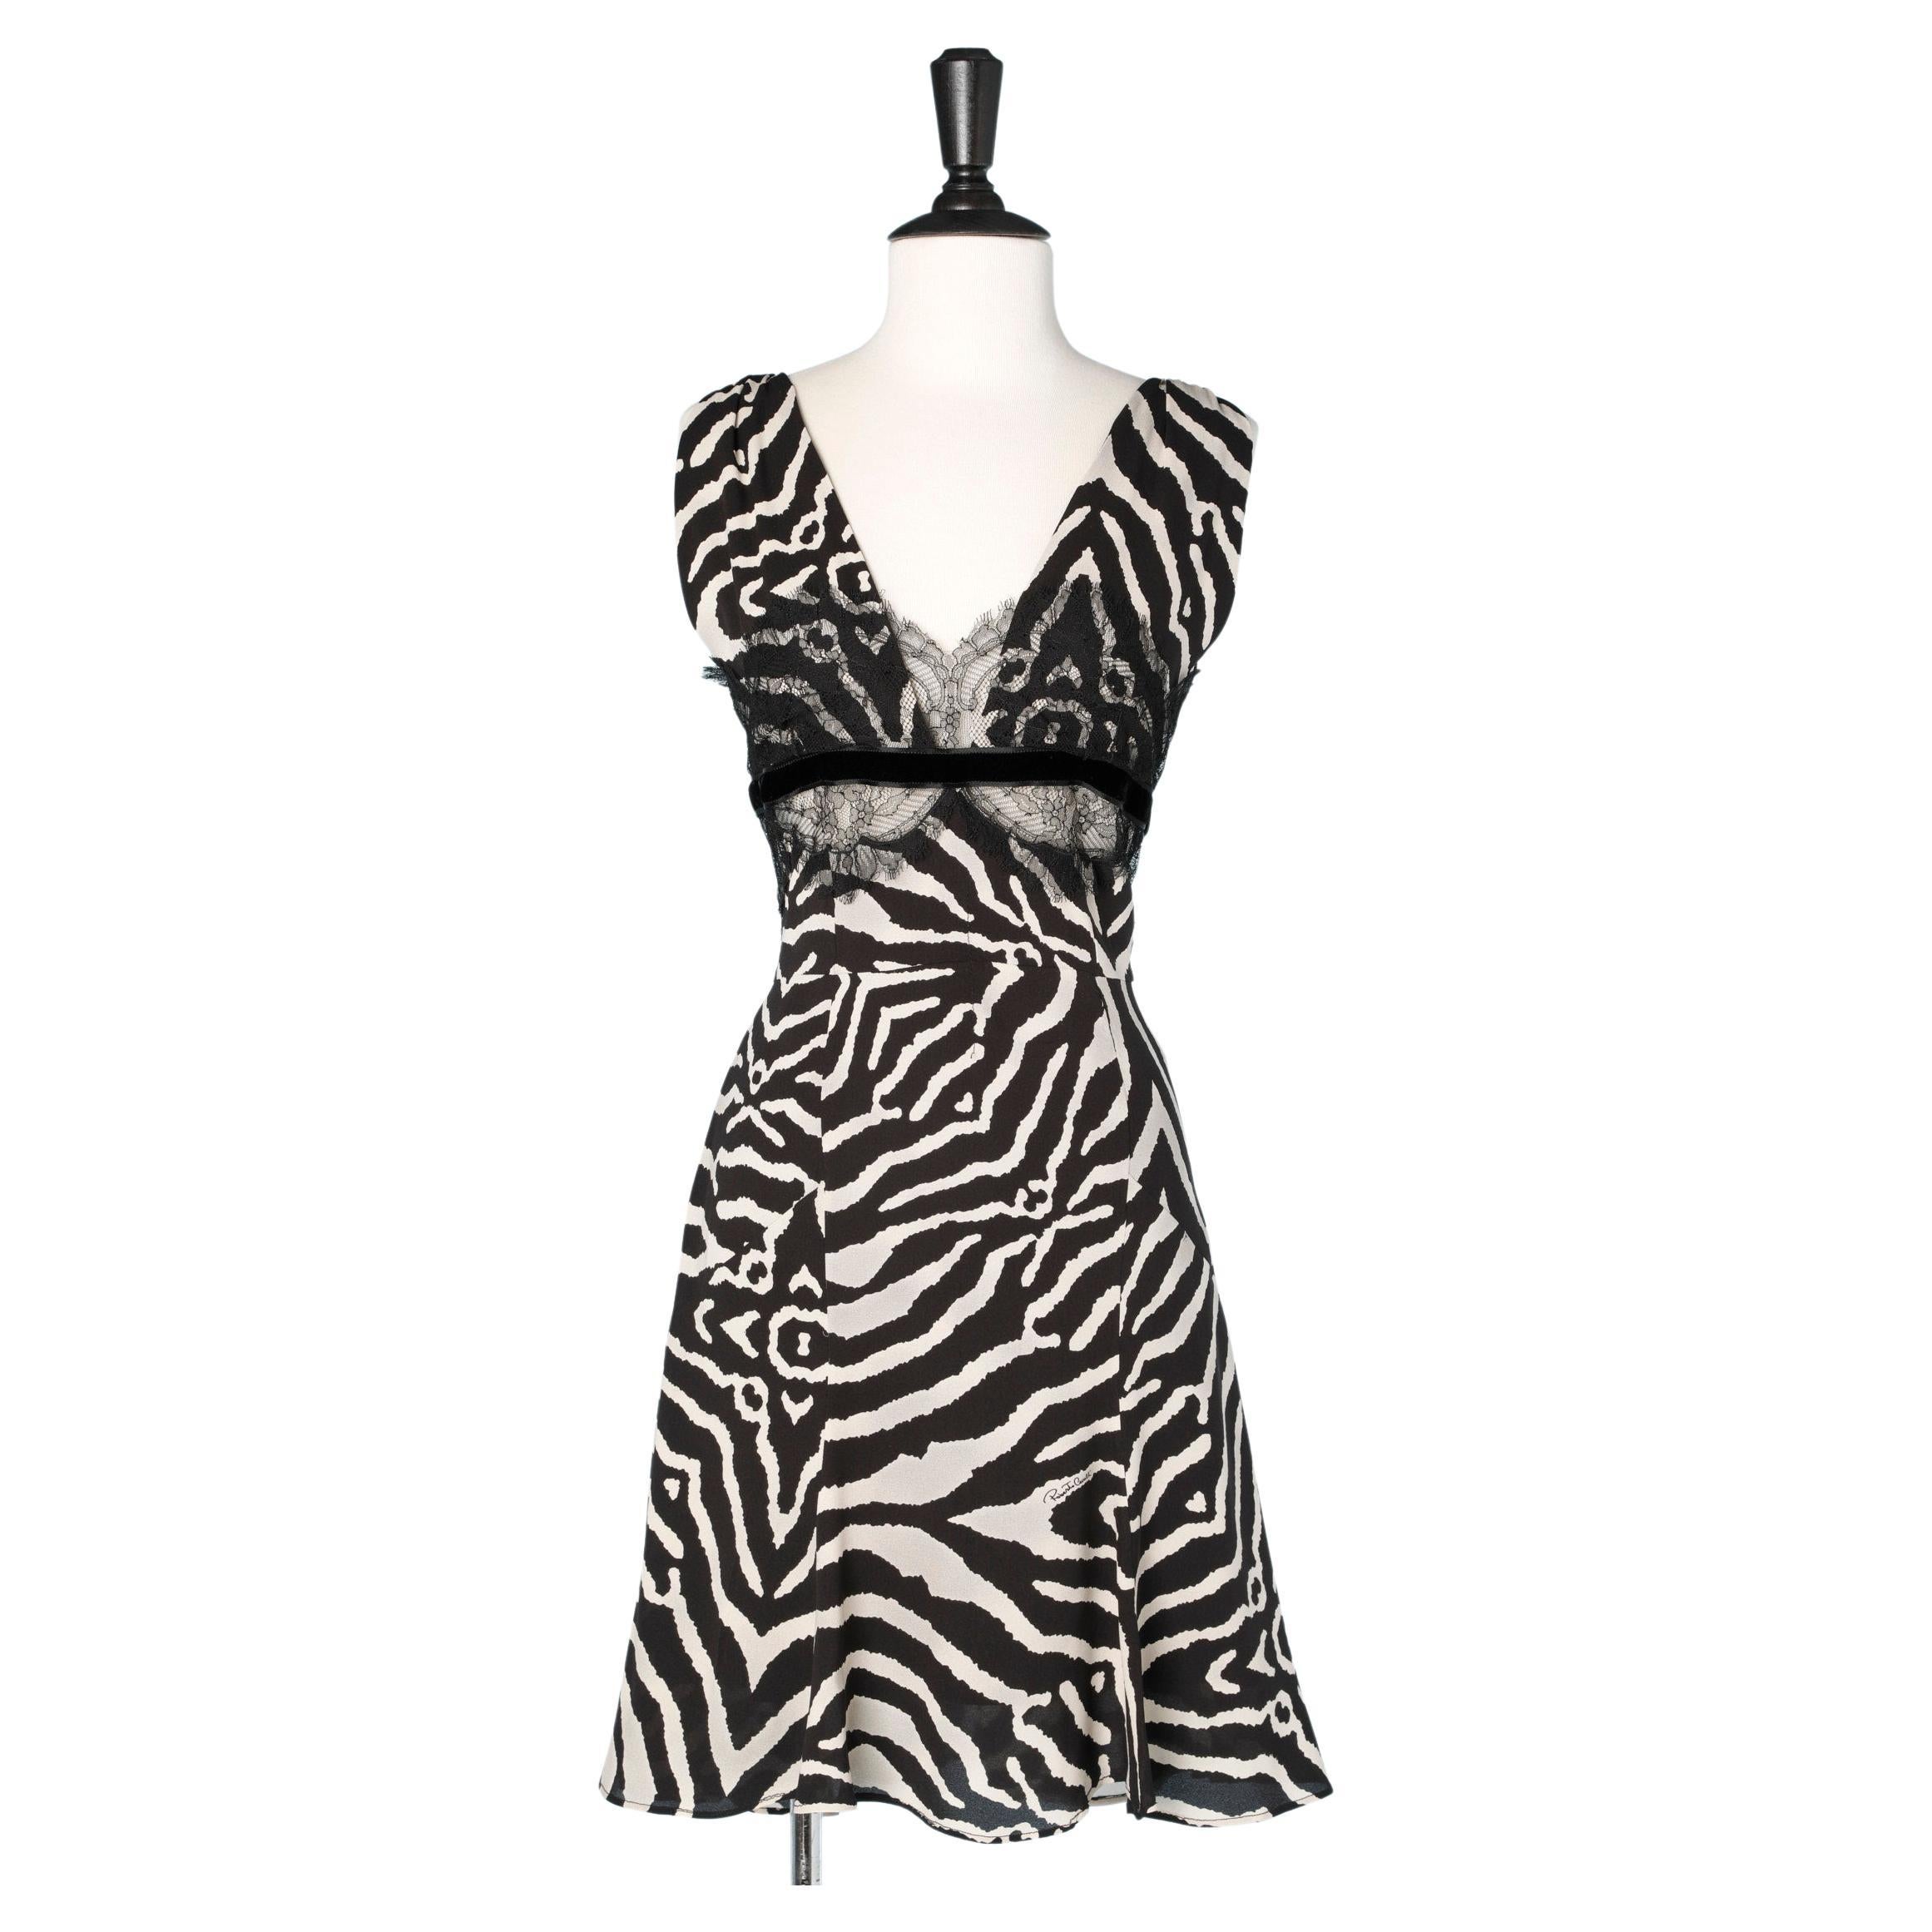 Zebra printed silk chiffon dress with black lace appliqué  Roberto Cavalli  For Sale